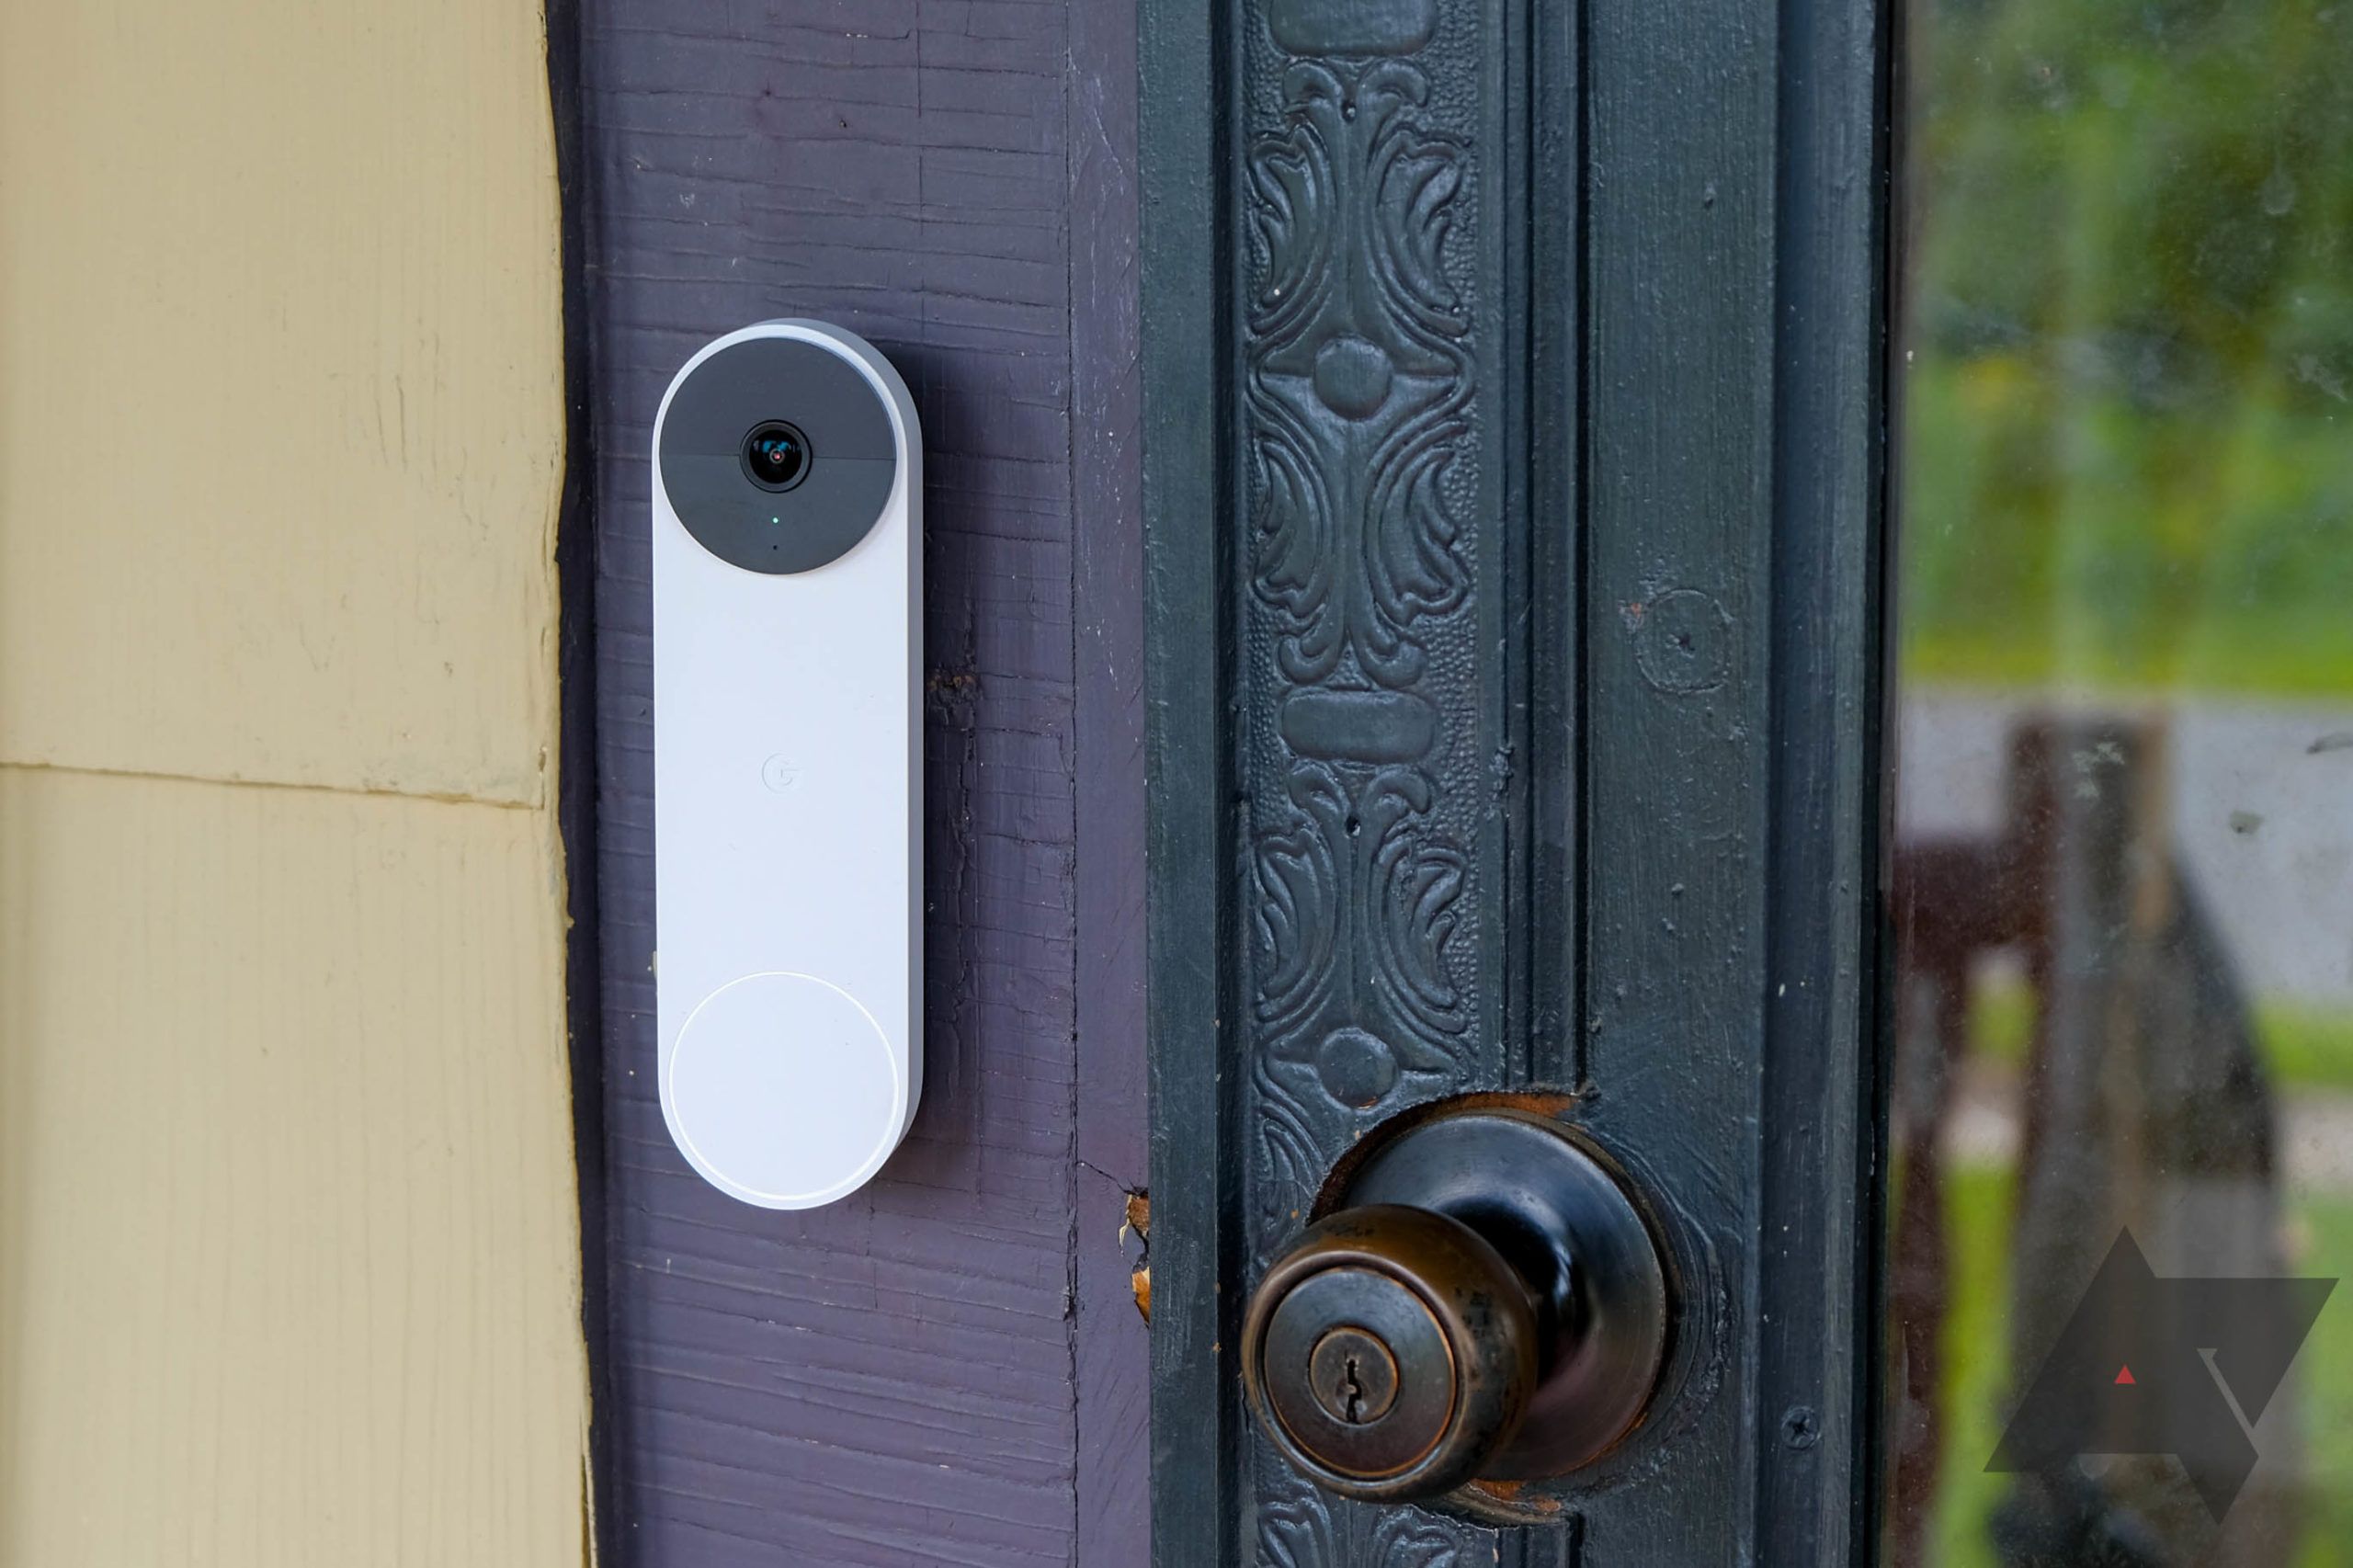 The Google Nest Doorbell mounted at a front door